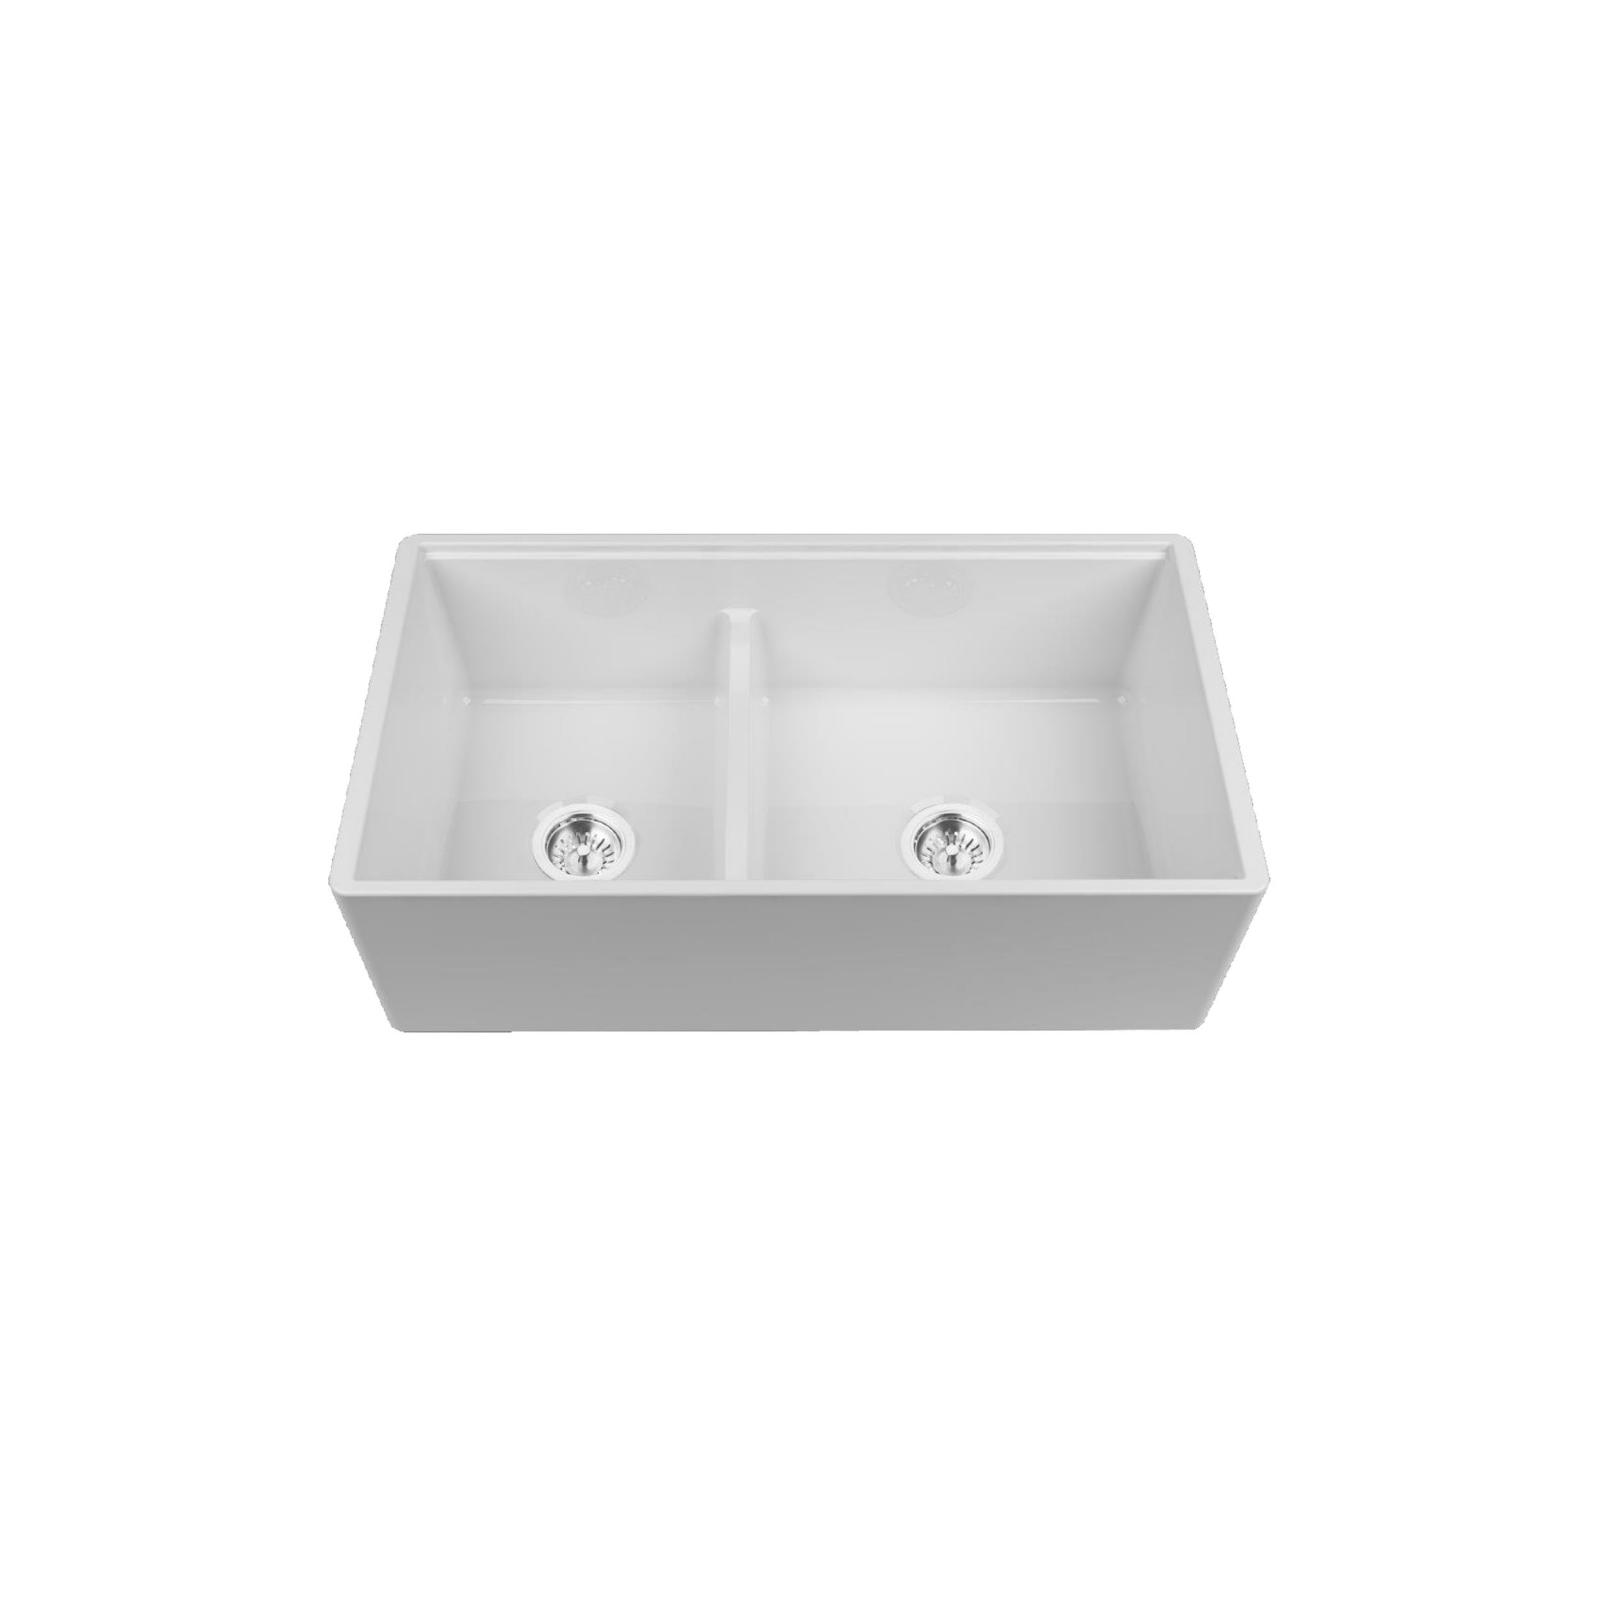 High-quality sink Louis Le Grand II - single bowl, ceramic - 2